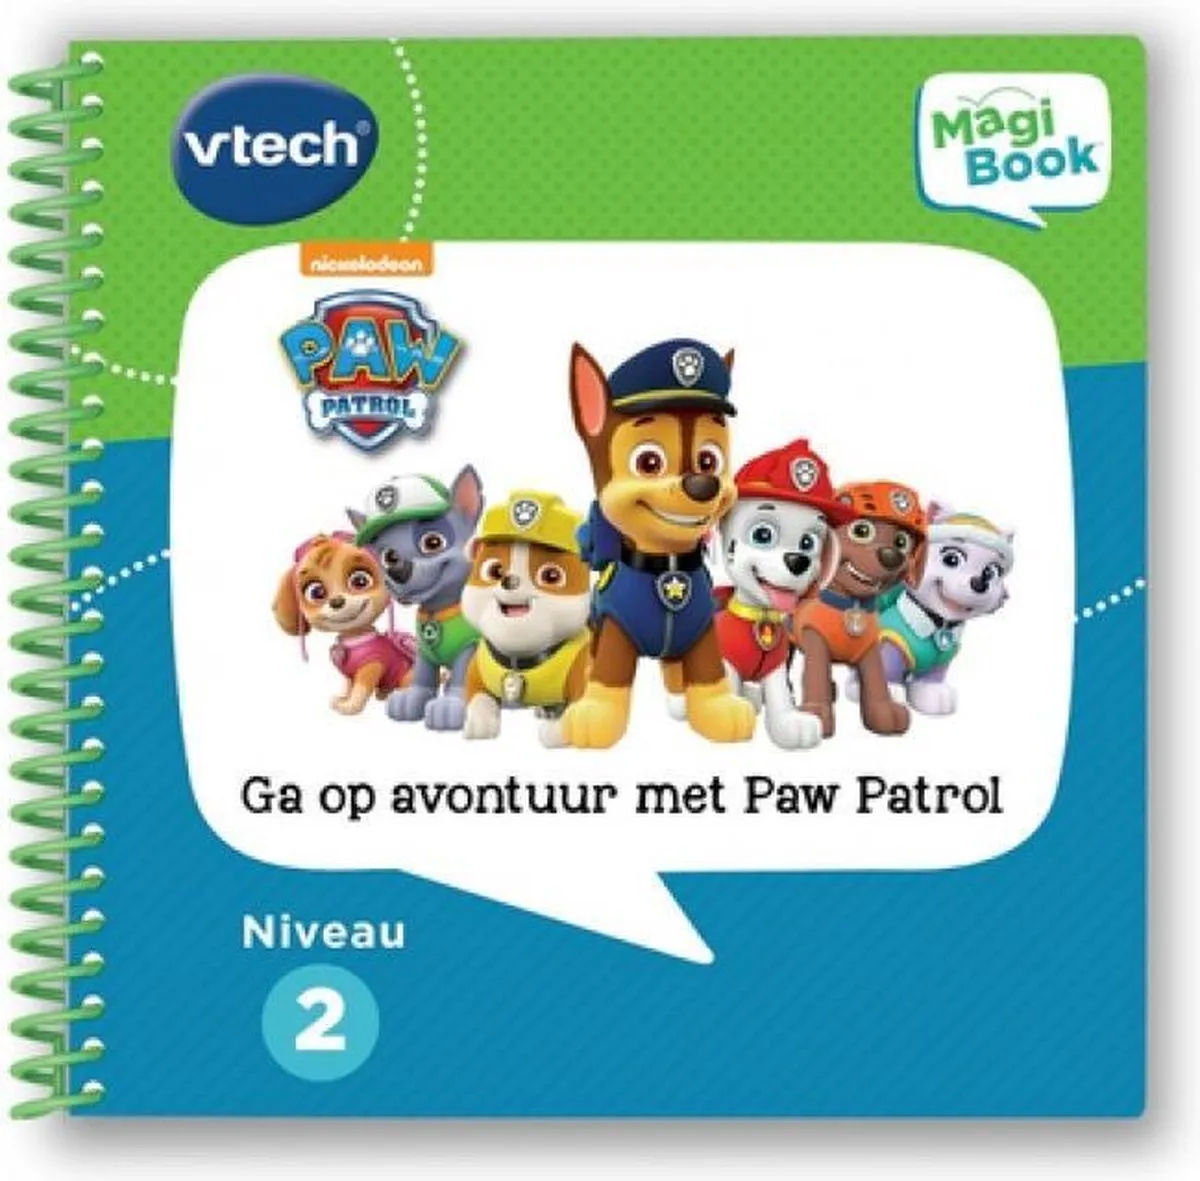 VTech MagiBook Activiteitenboek PAW Patrol - Ga op Avontuur met PAW Patrol - Educatief Speelgoed - Niveau 2 - 3 tot 6 Jaar speelgoed